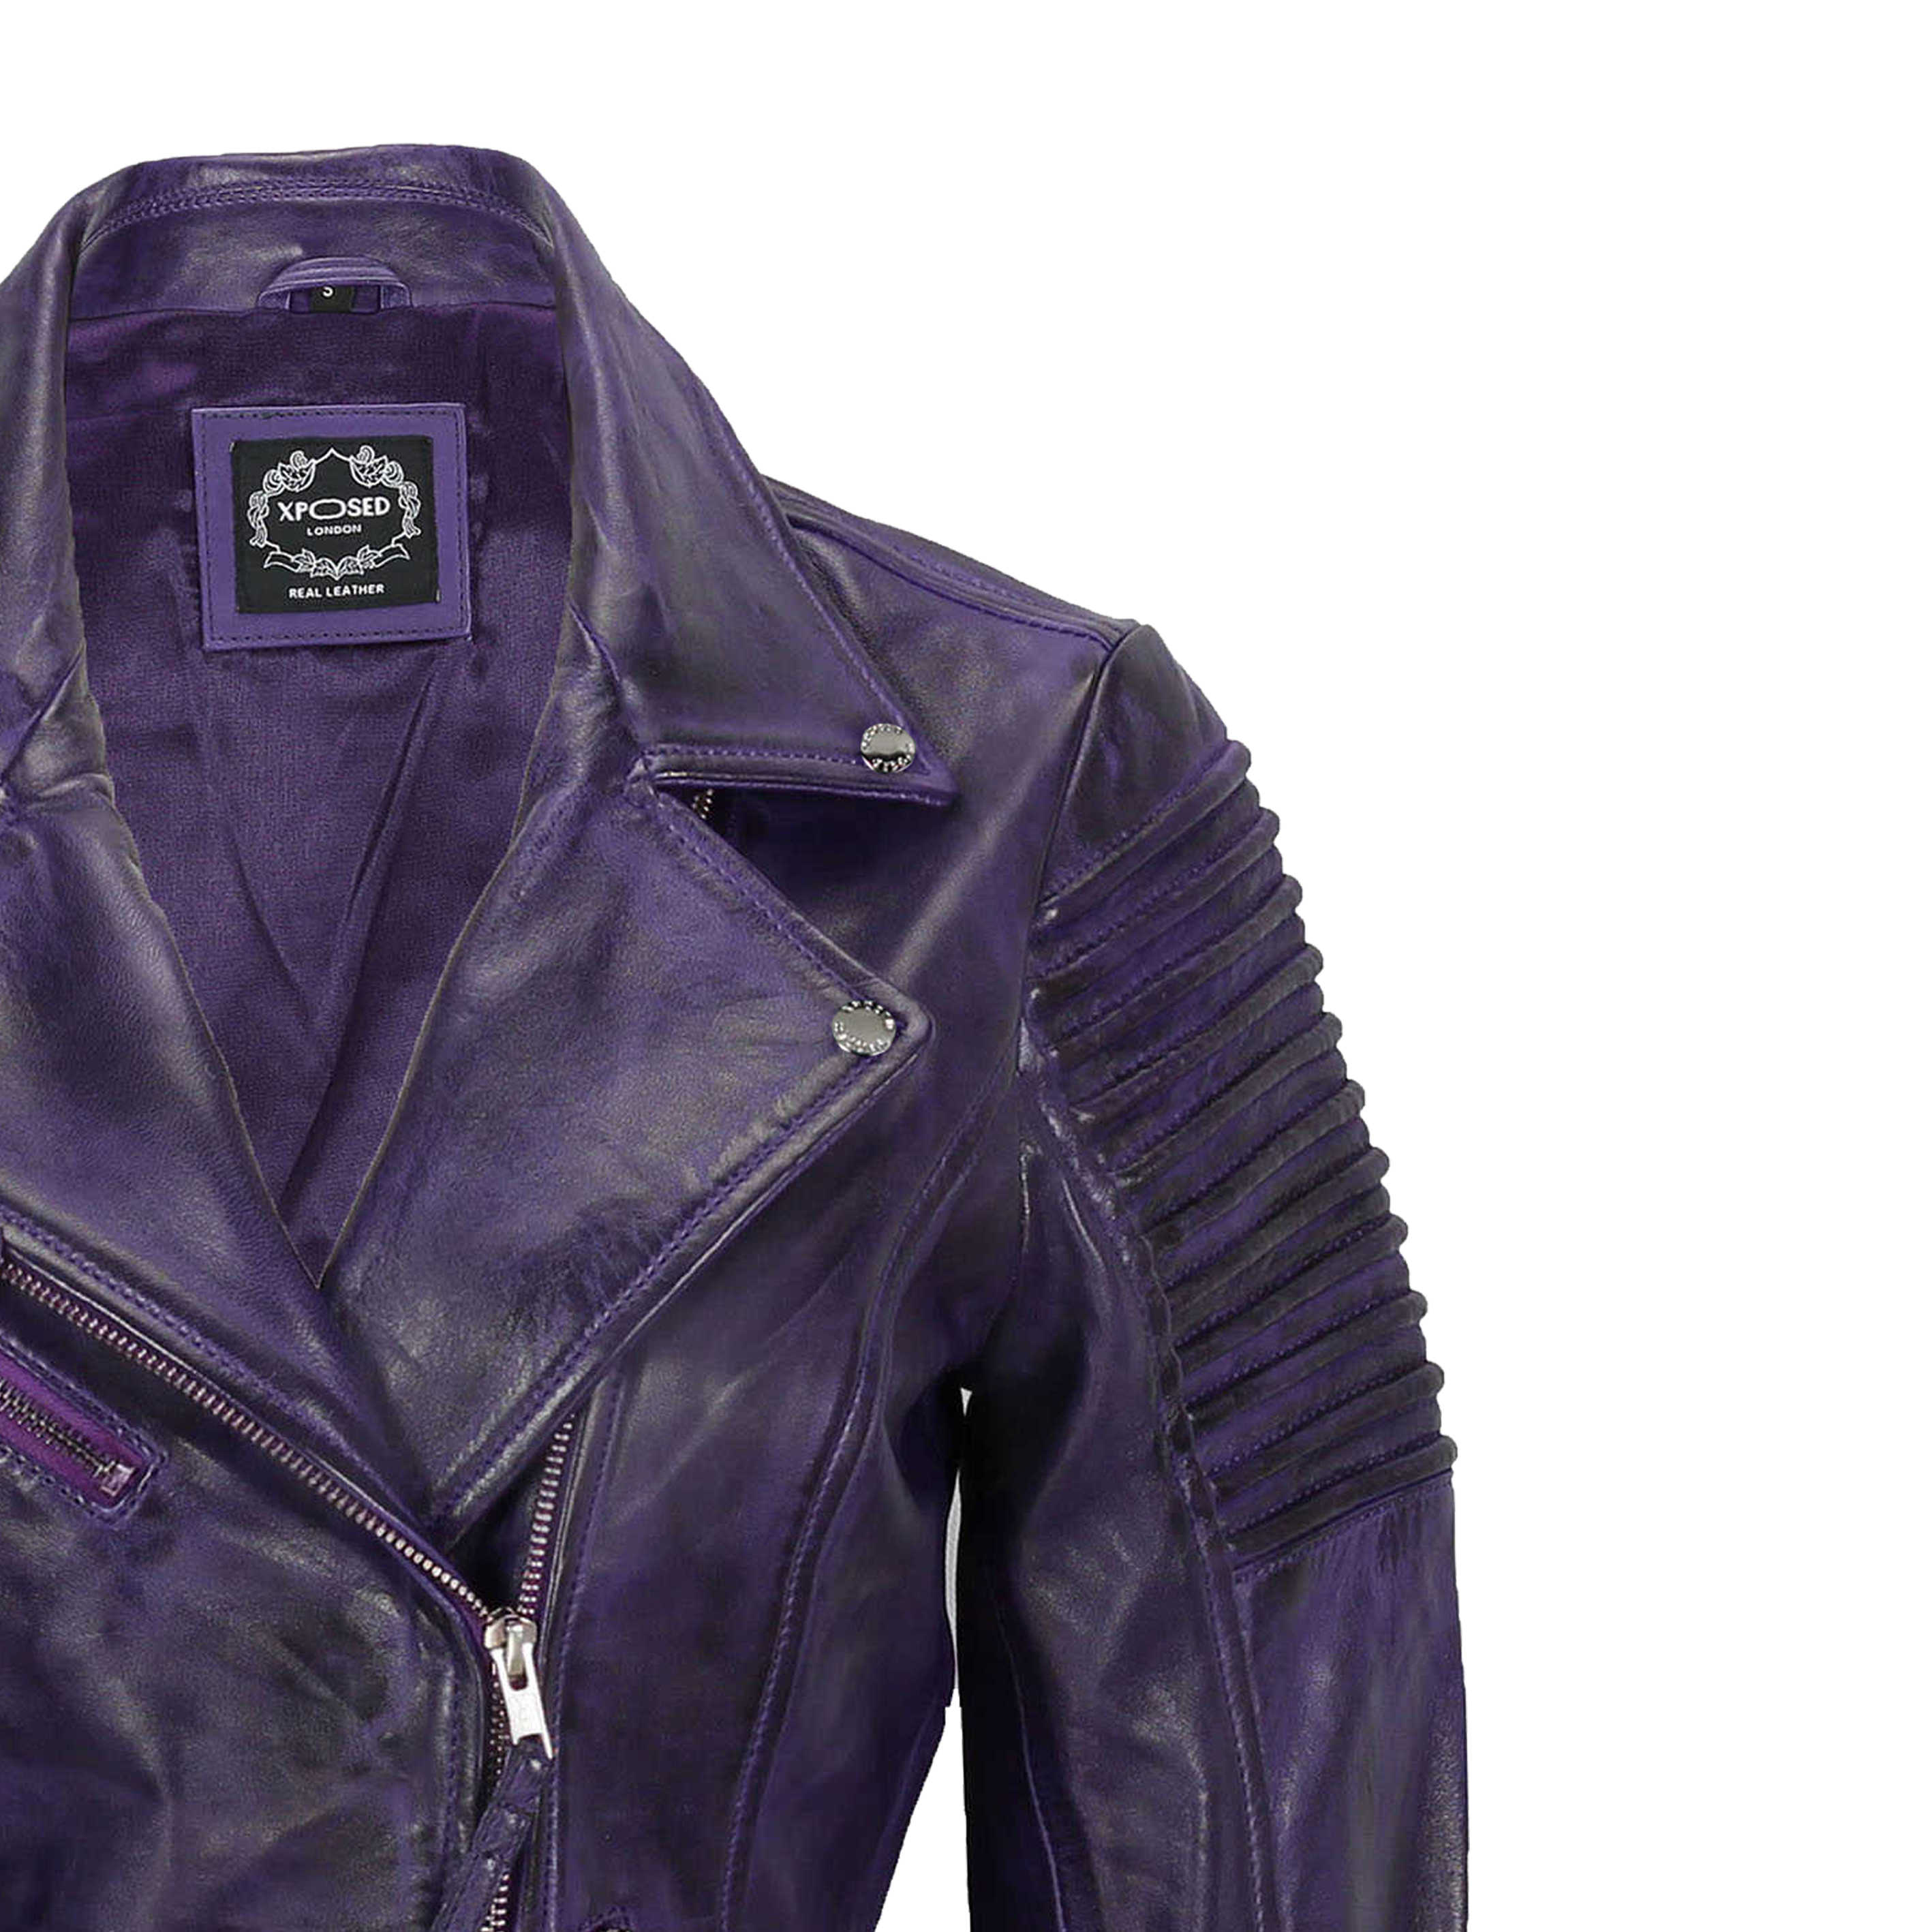 Ladies Retro Biker Jacket Purple